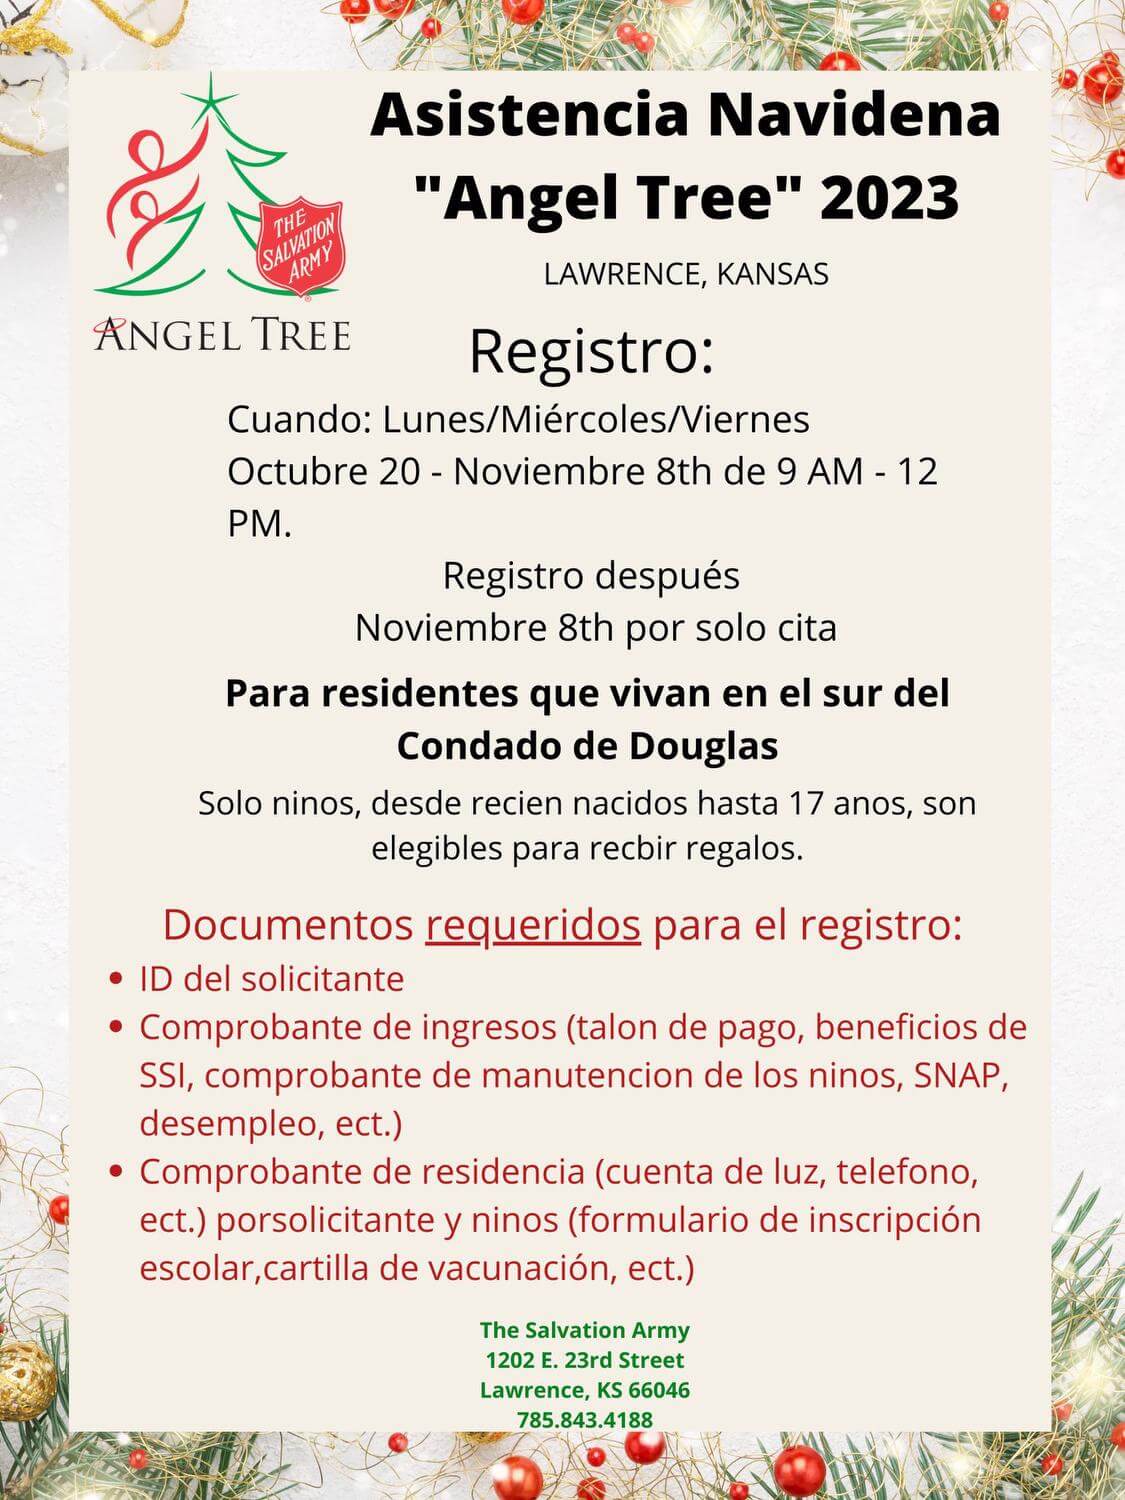 Angel Tree Spanish version